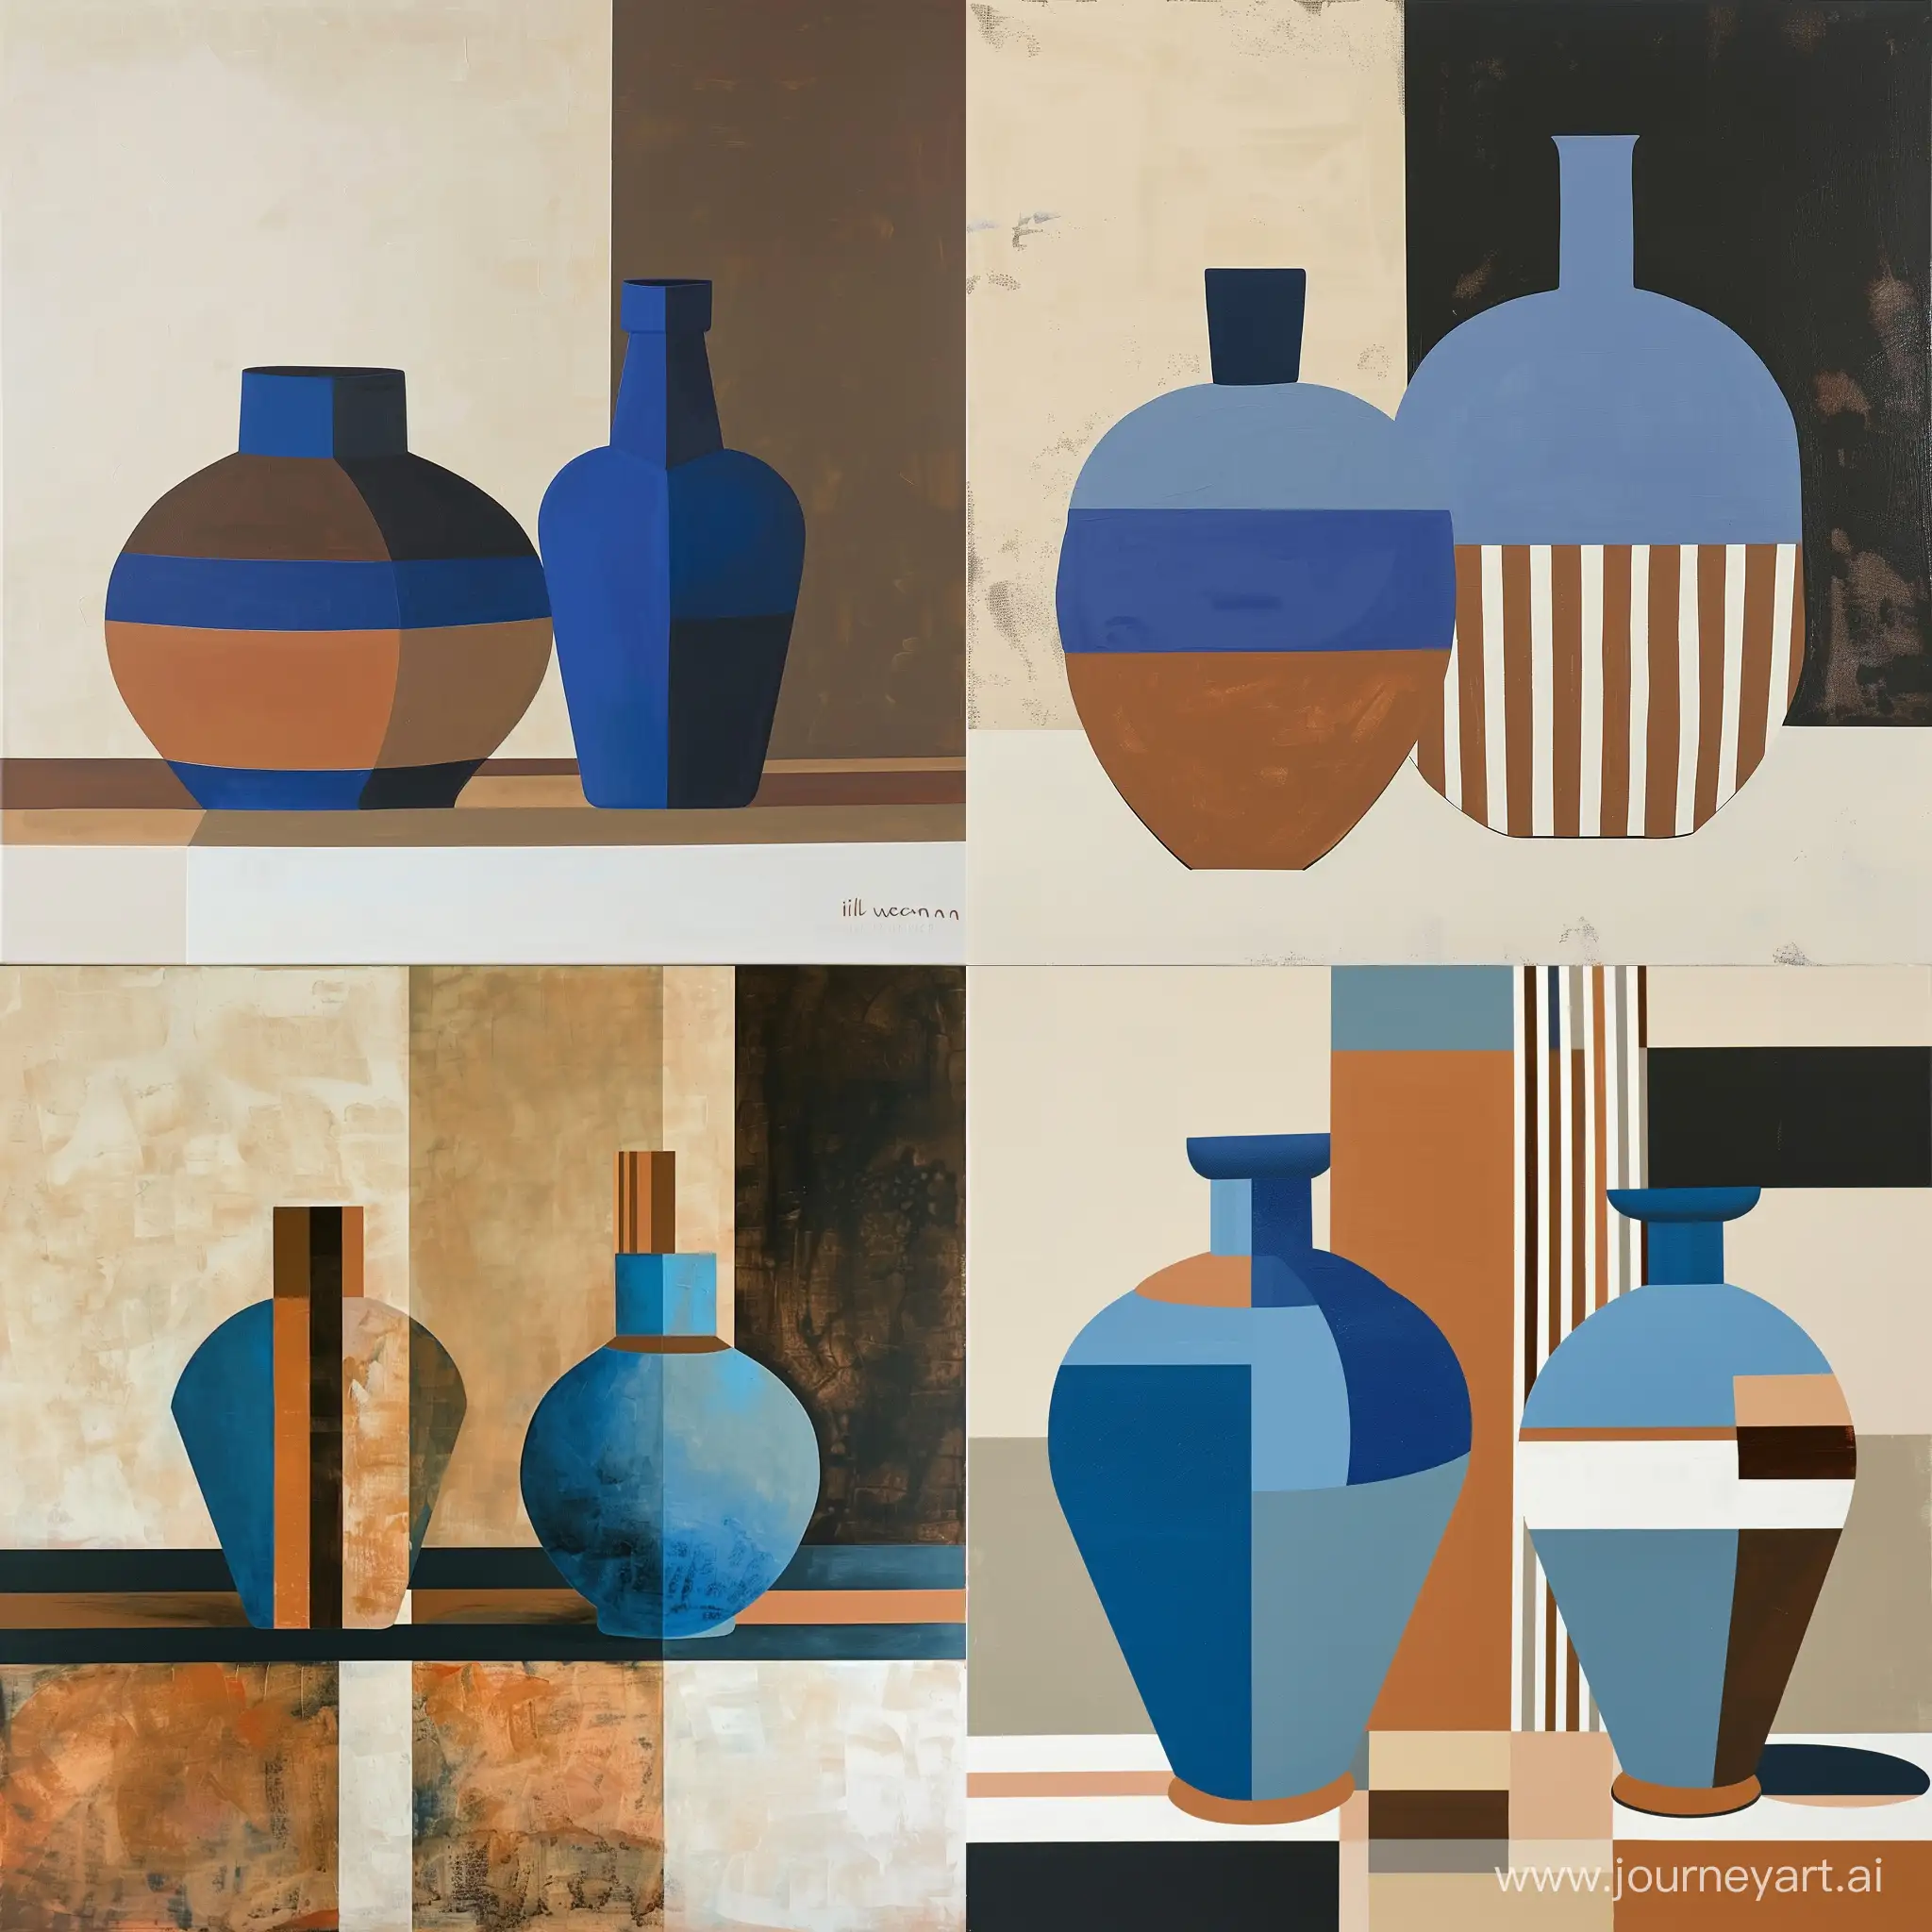 Bold-Terracotta-Vases-in-William-Wegman-Style-Mural-Painting